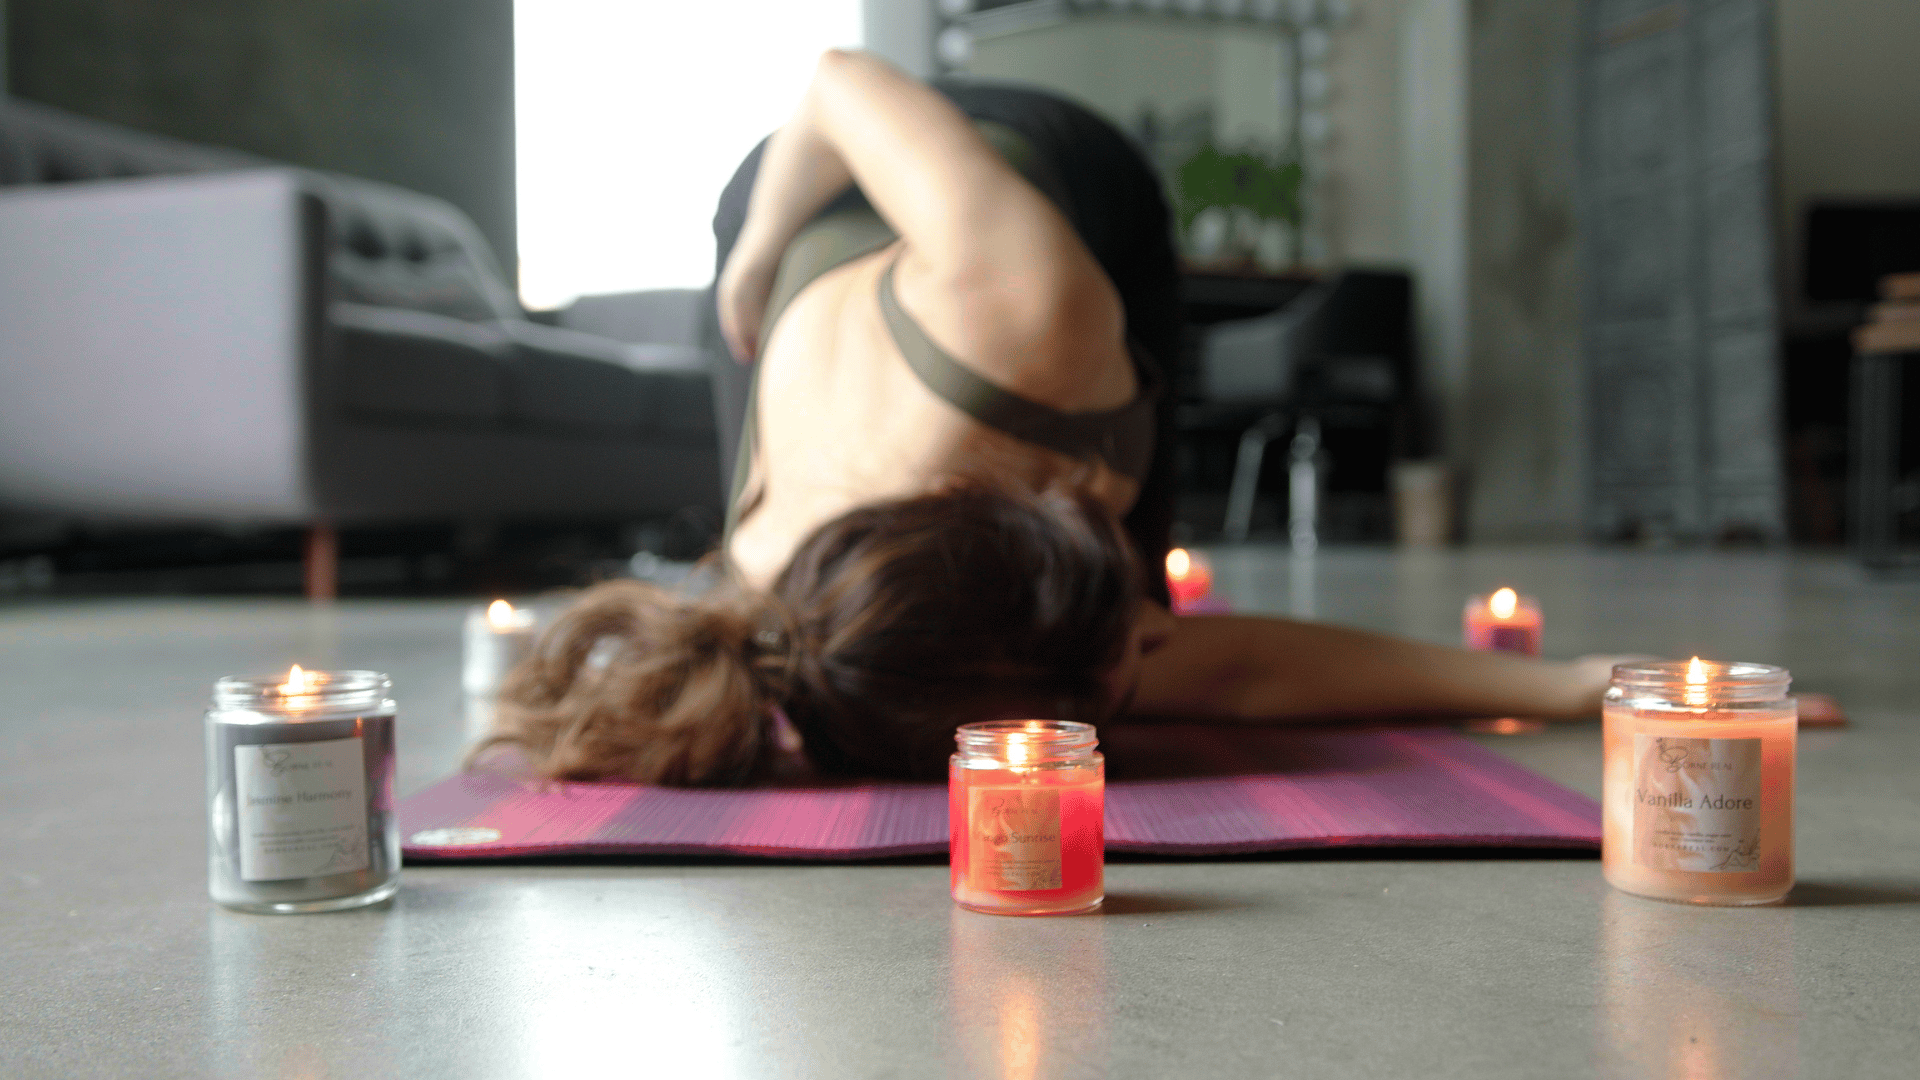 Load video: woman doing candlelit yoga